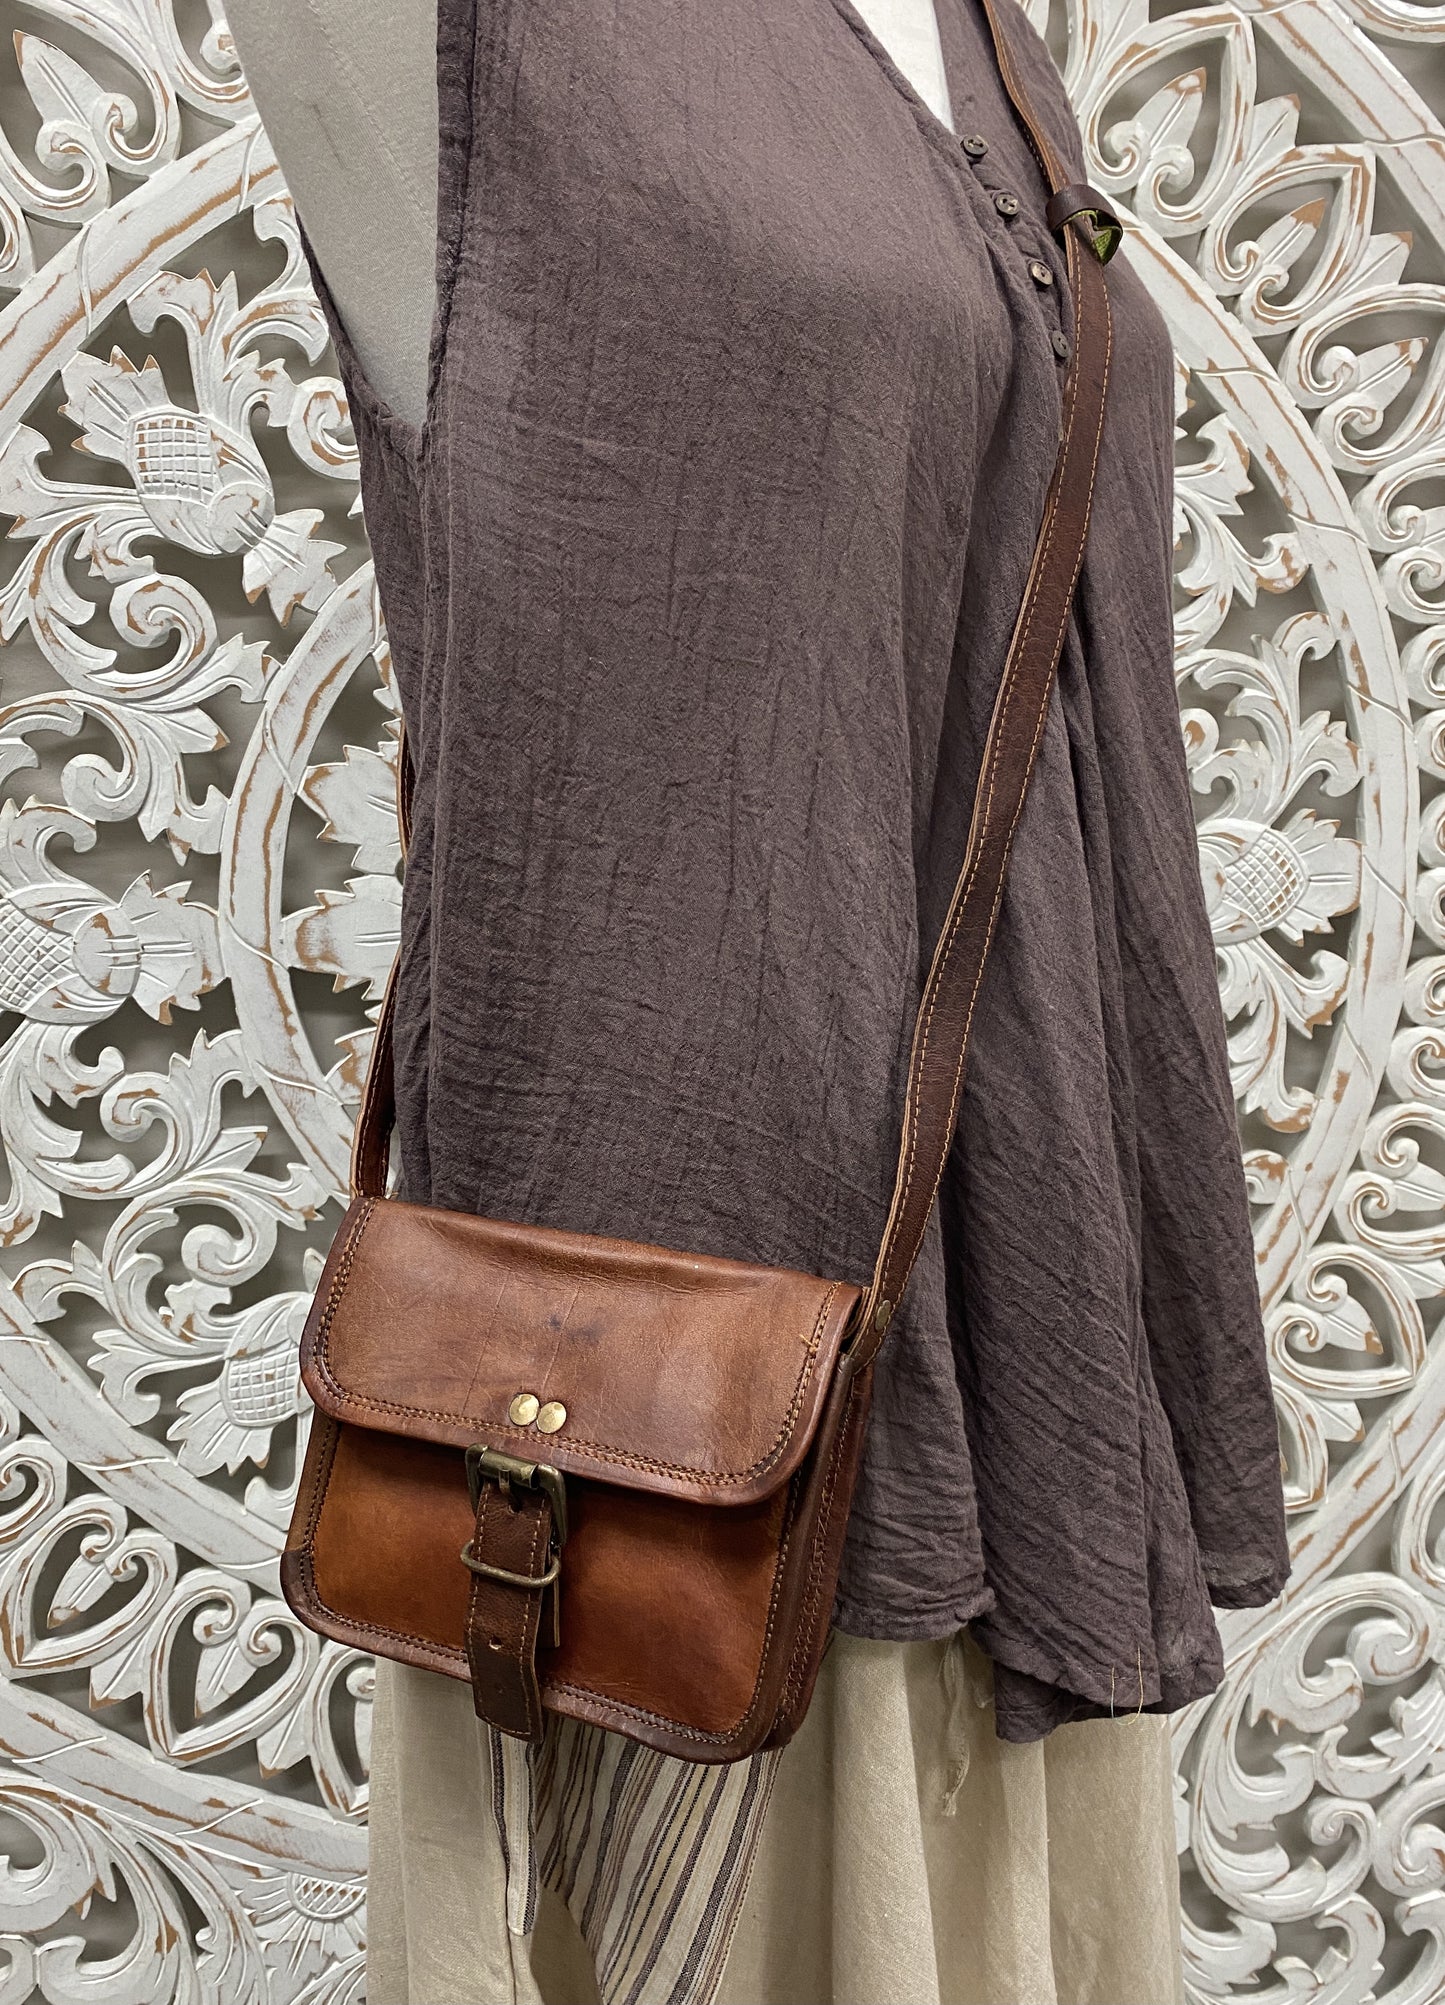 Hand Made Camel Leather Mini Square bottom purse 4 Pockets! 7" x 5”